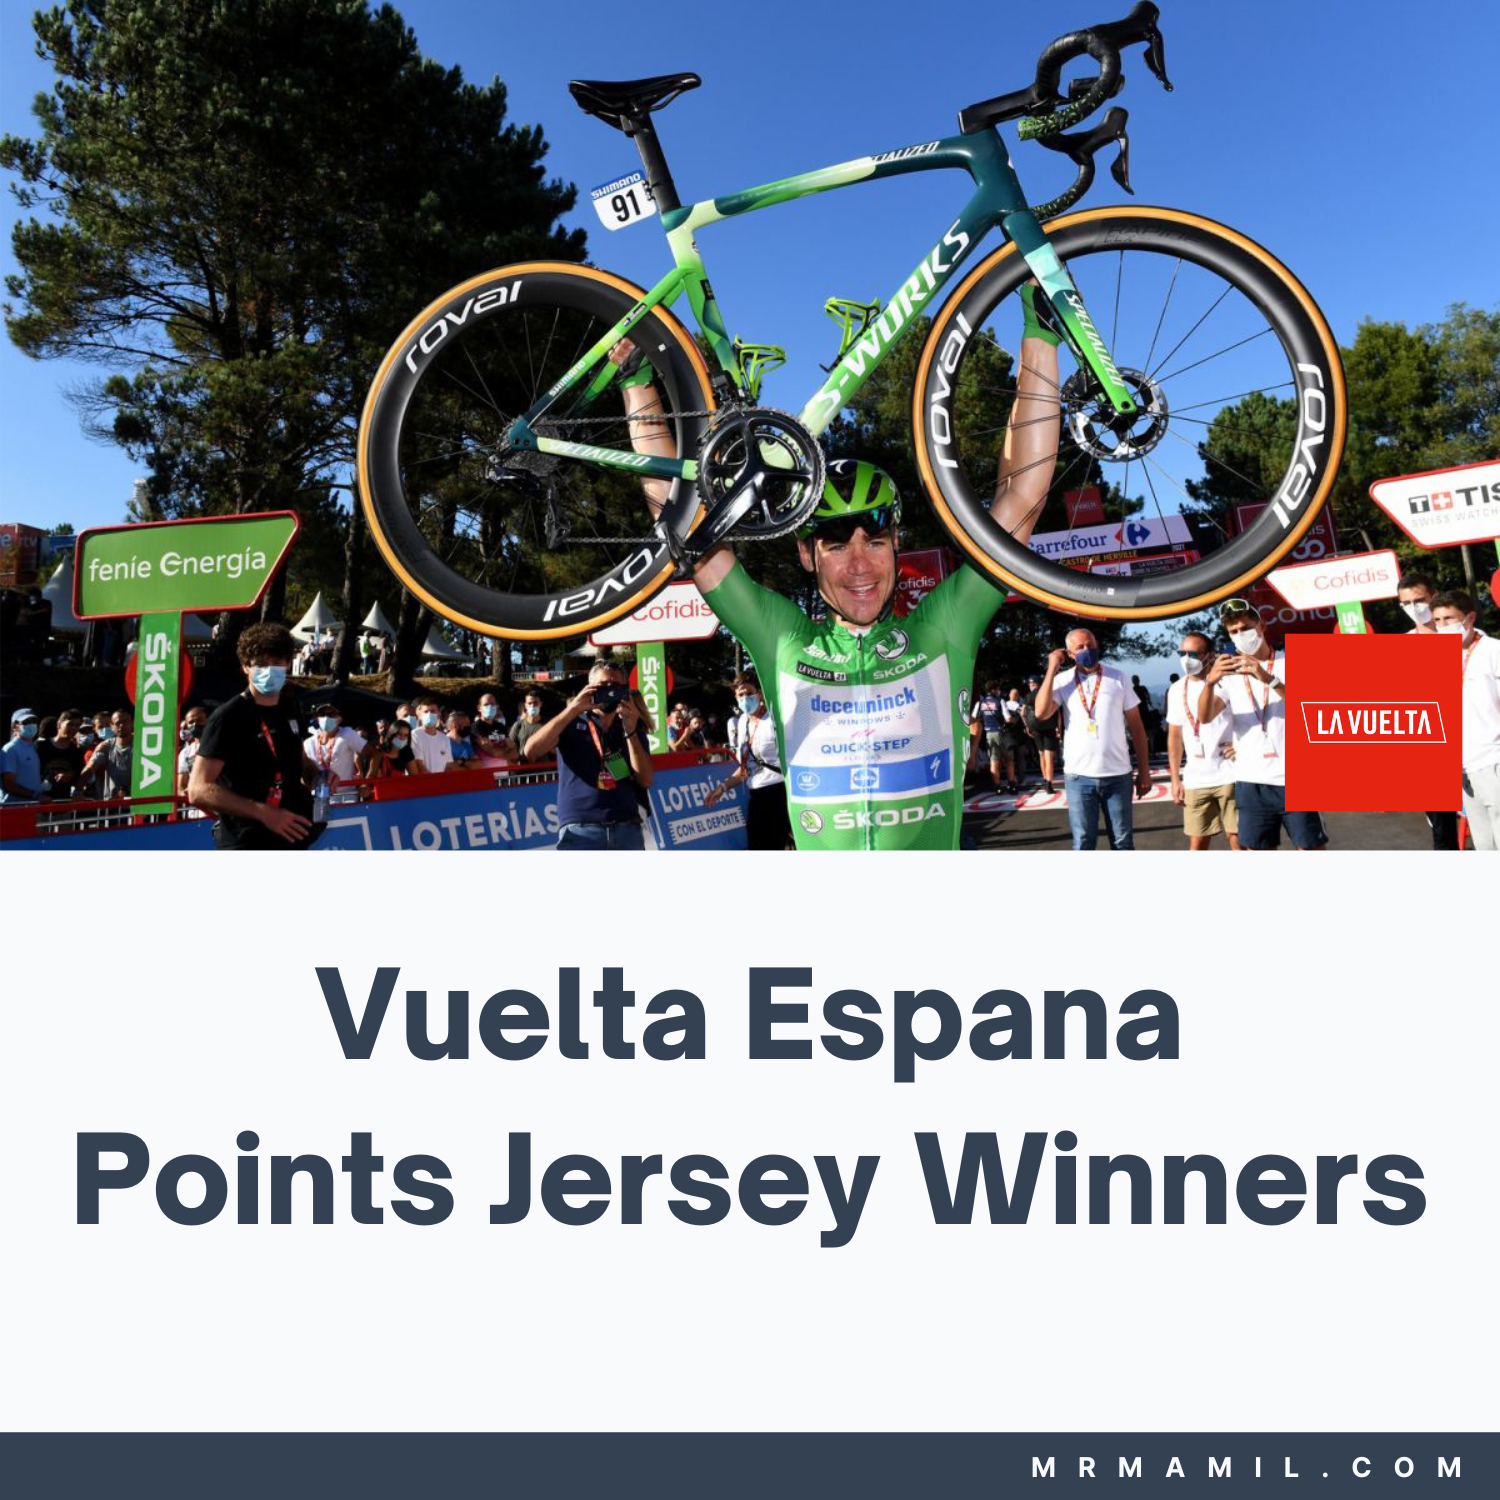 Vuelta Espana Points Jersey Winners